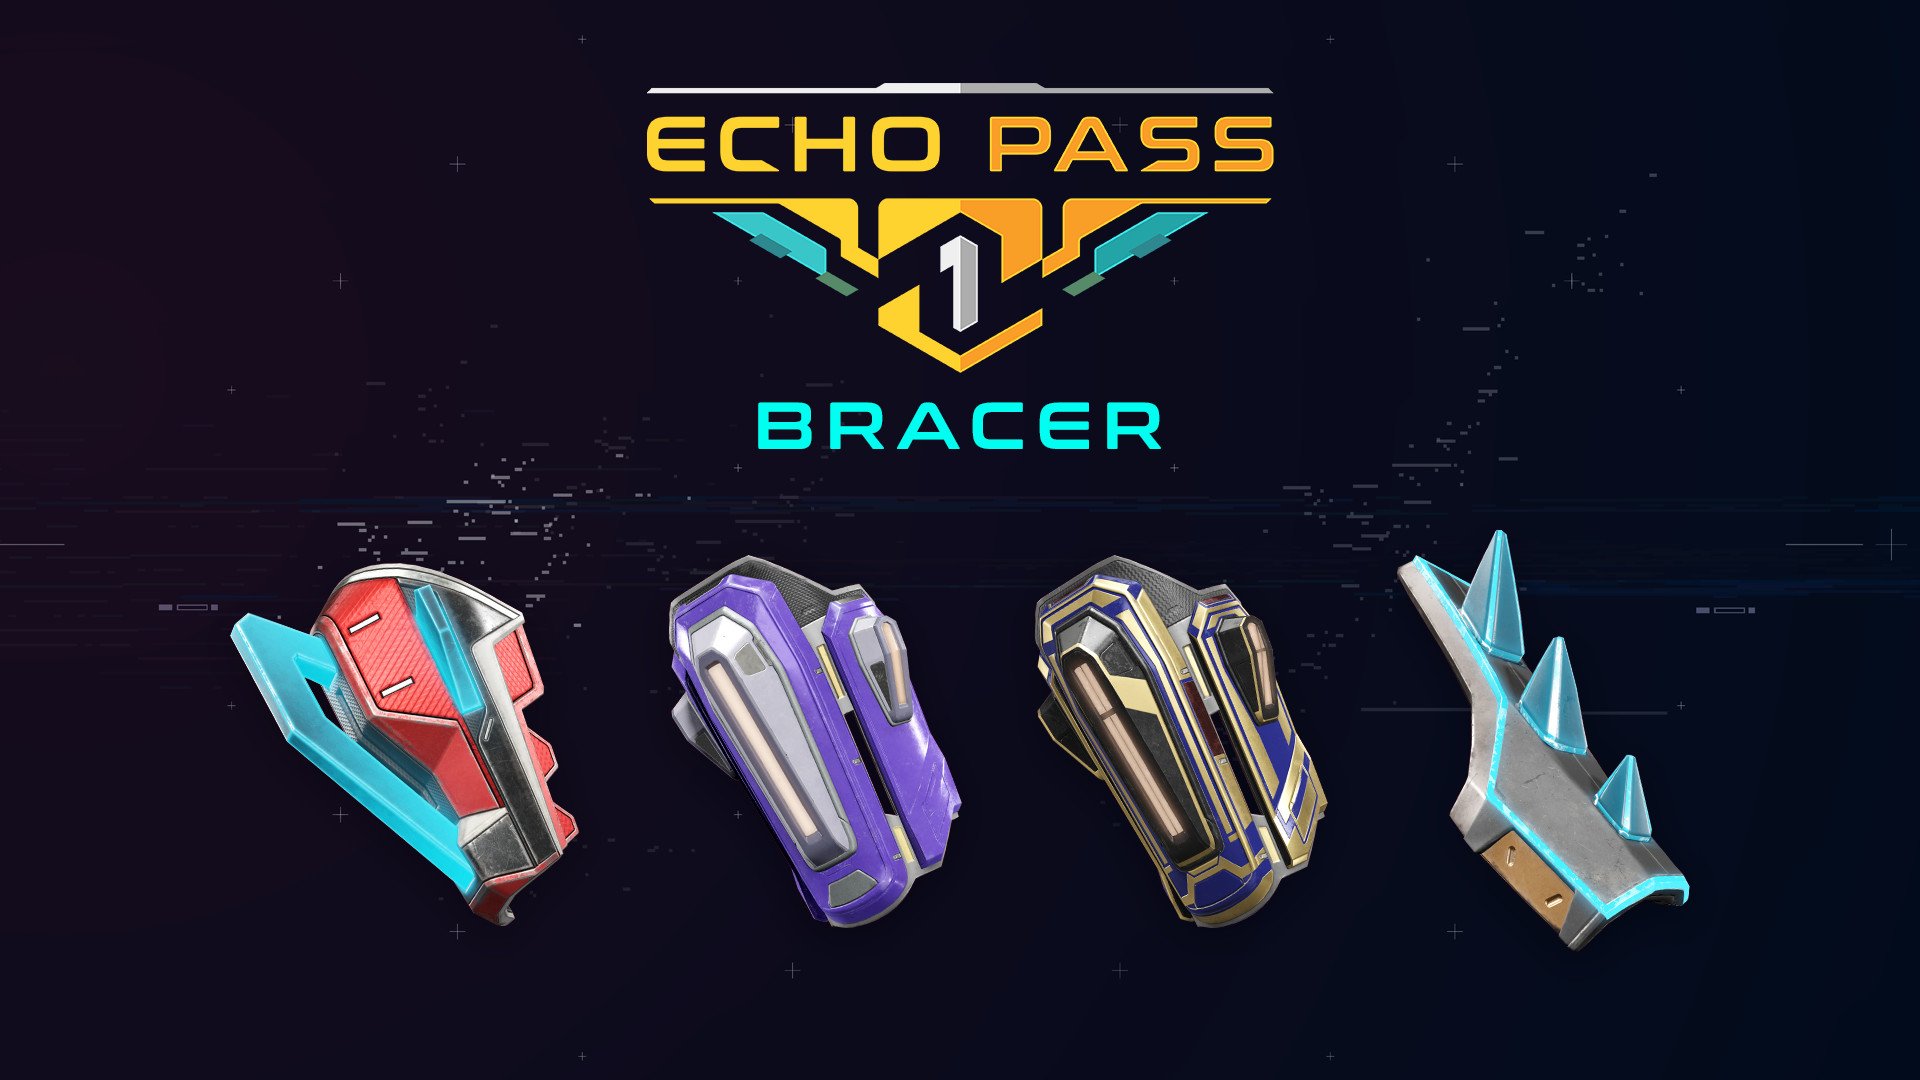 Echo Vr Echo Pass Season 1 Bracers